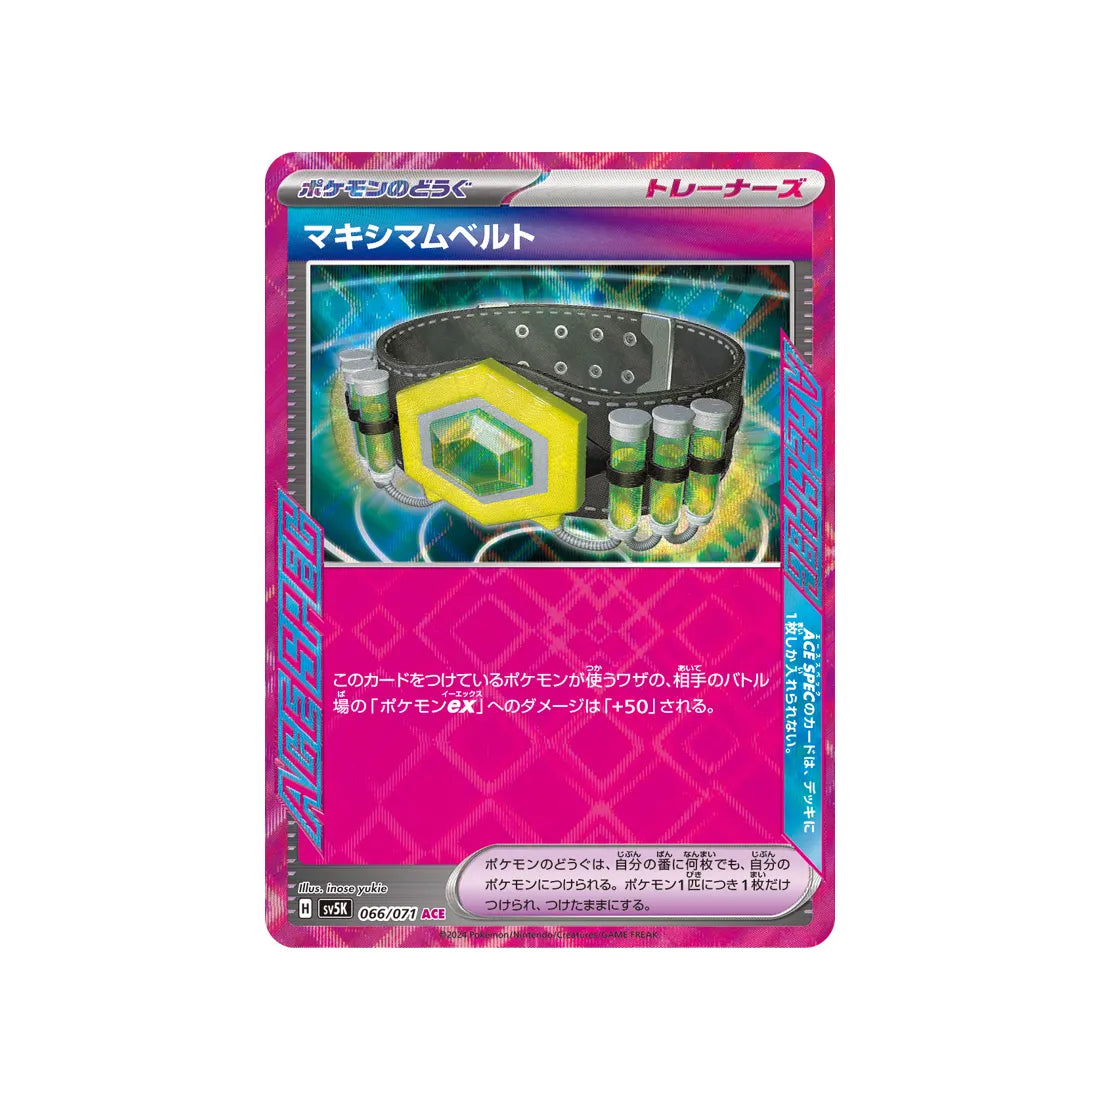 Carte Pokémon Wild Force SV5K 066/071 : Maximum Belt